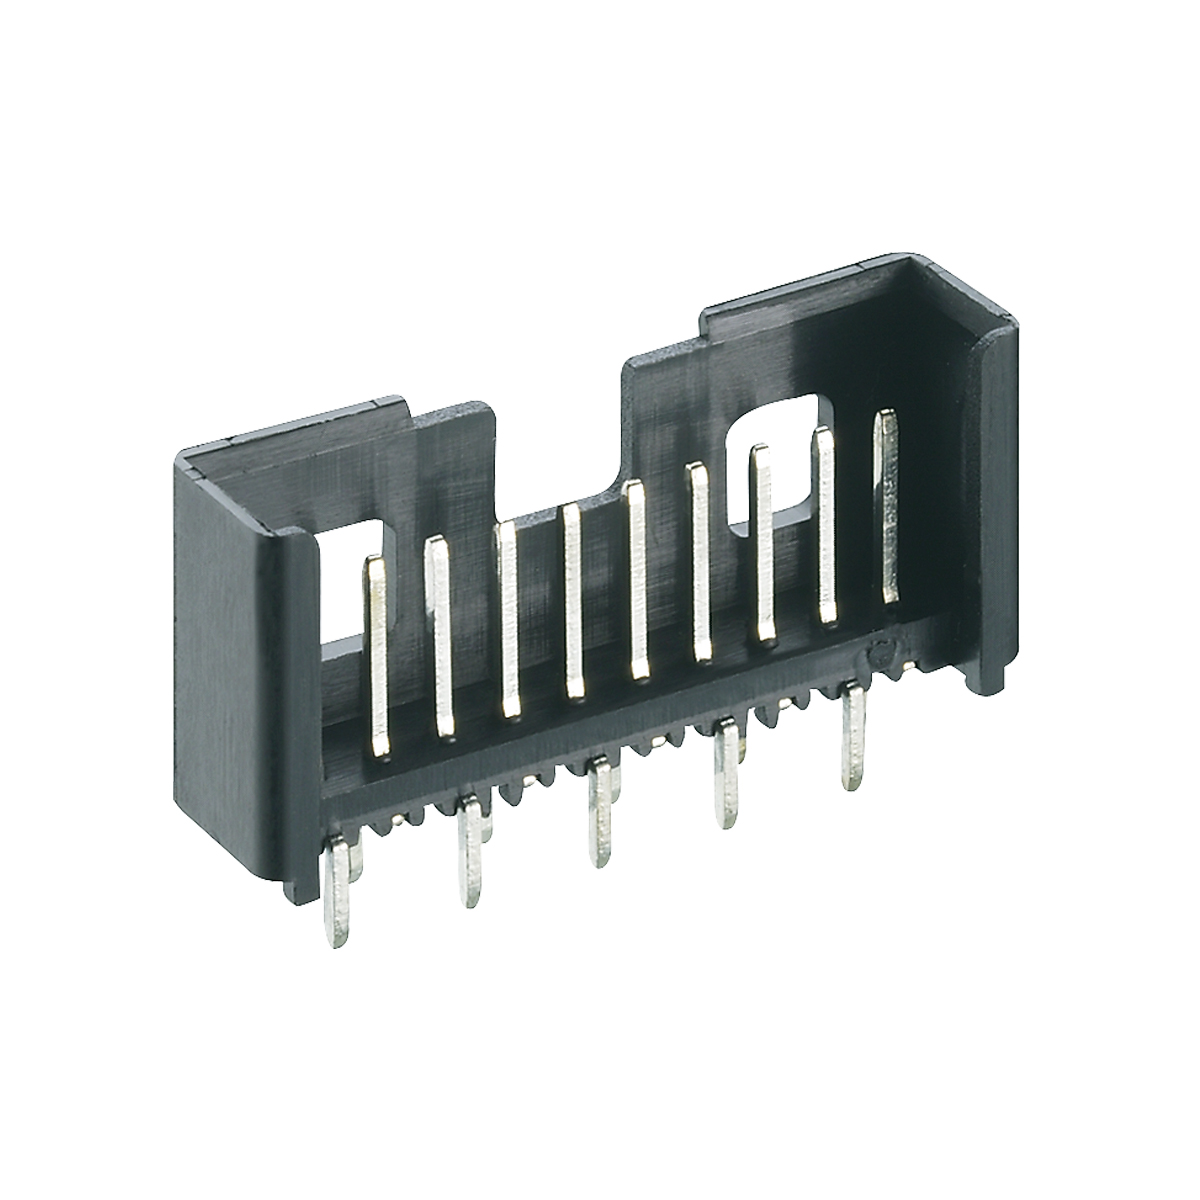 Lumberg: 2,5 MSFQ/O (Series 31 | Minimodul™ connectors, pitch 2.5 mm)